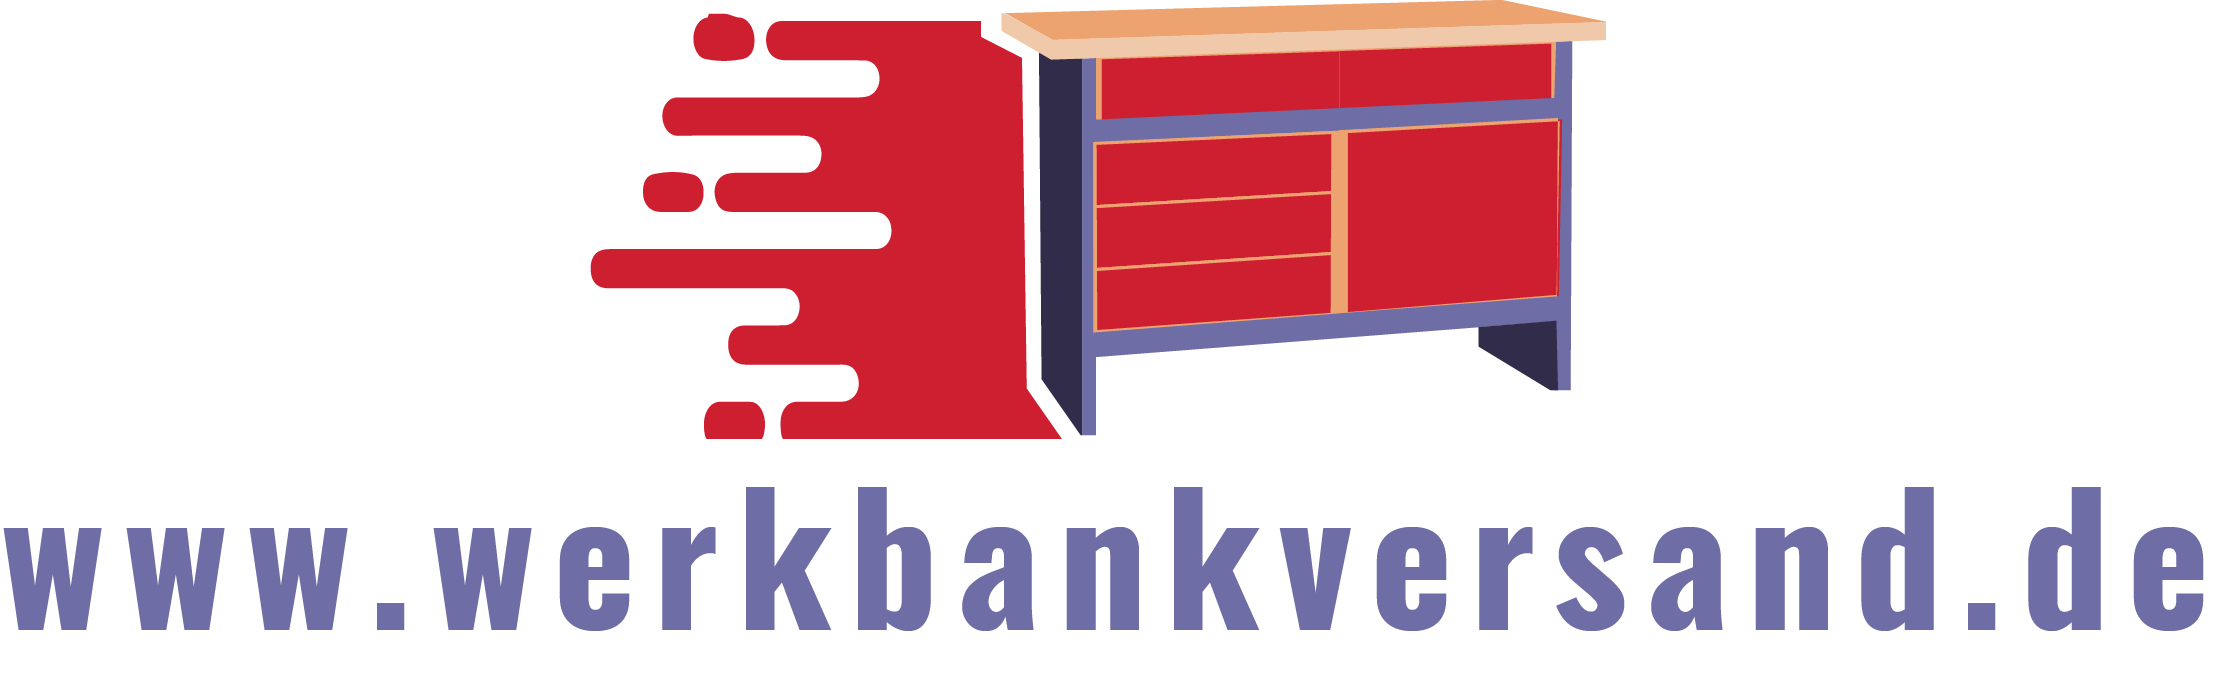 logo www.werkbankversand.de groß